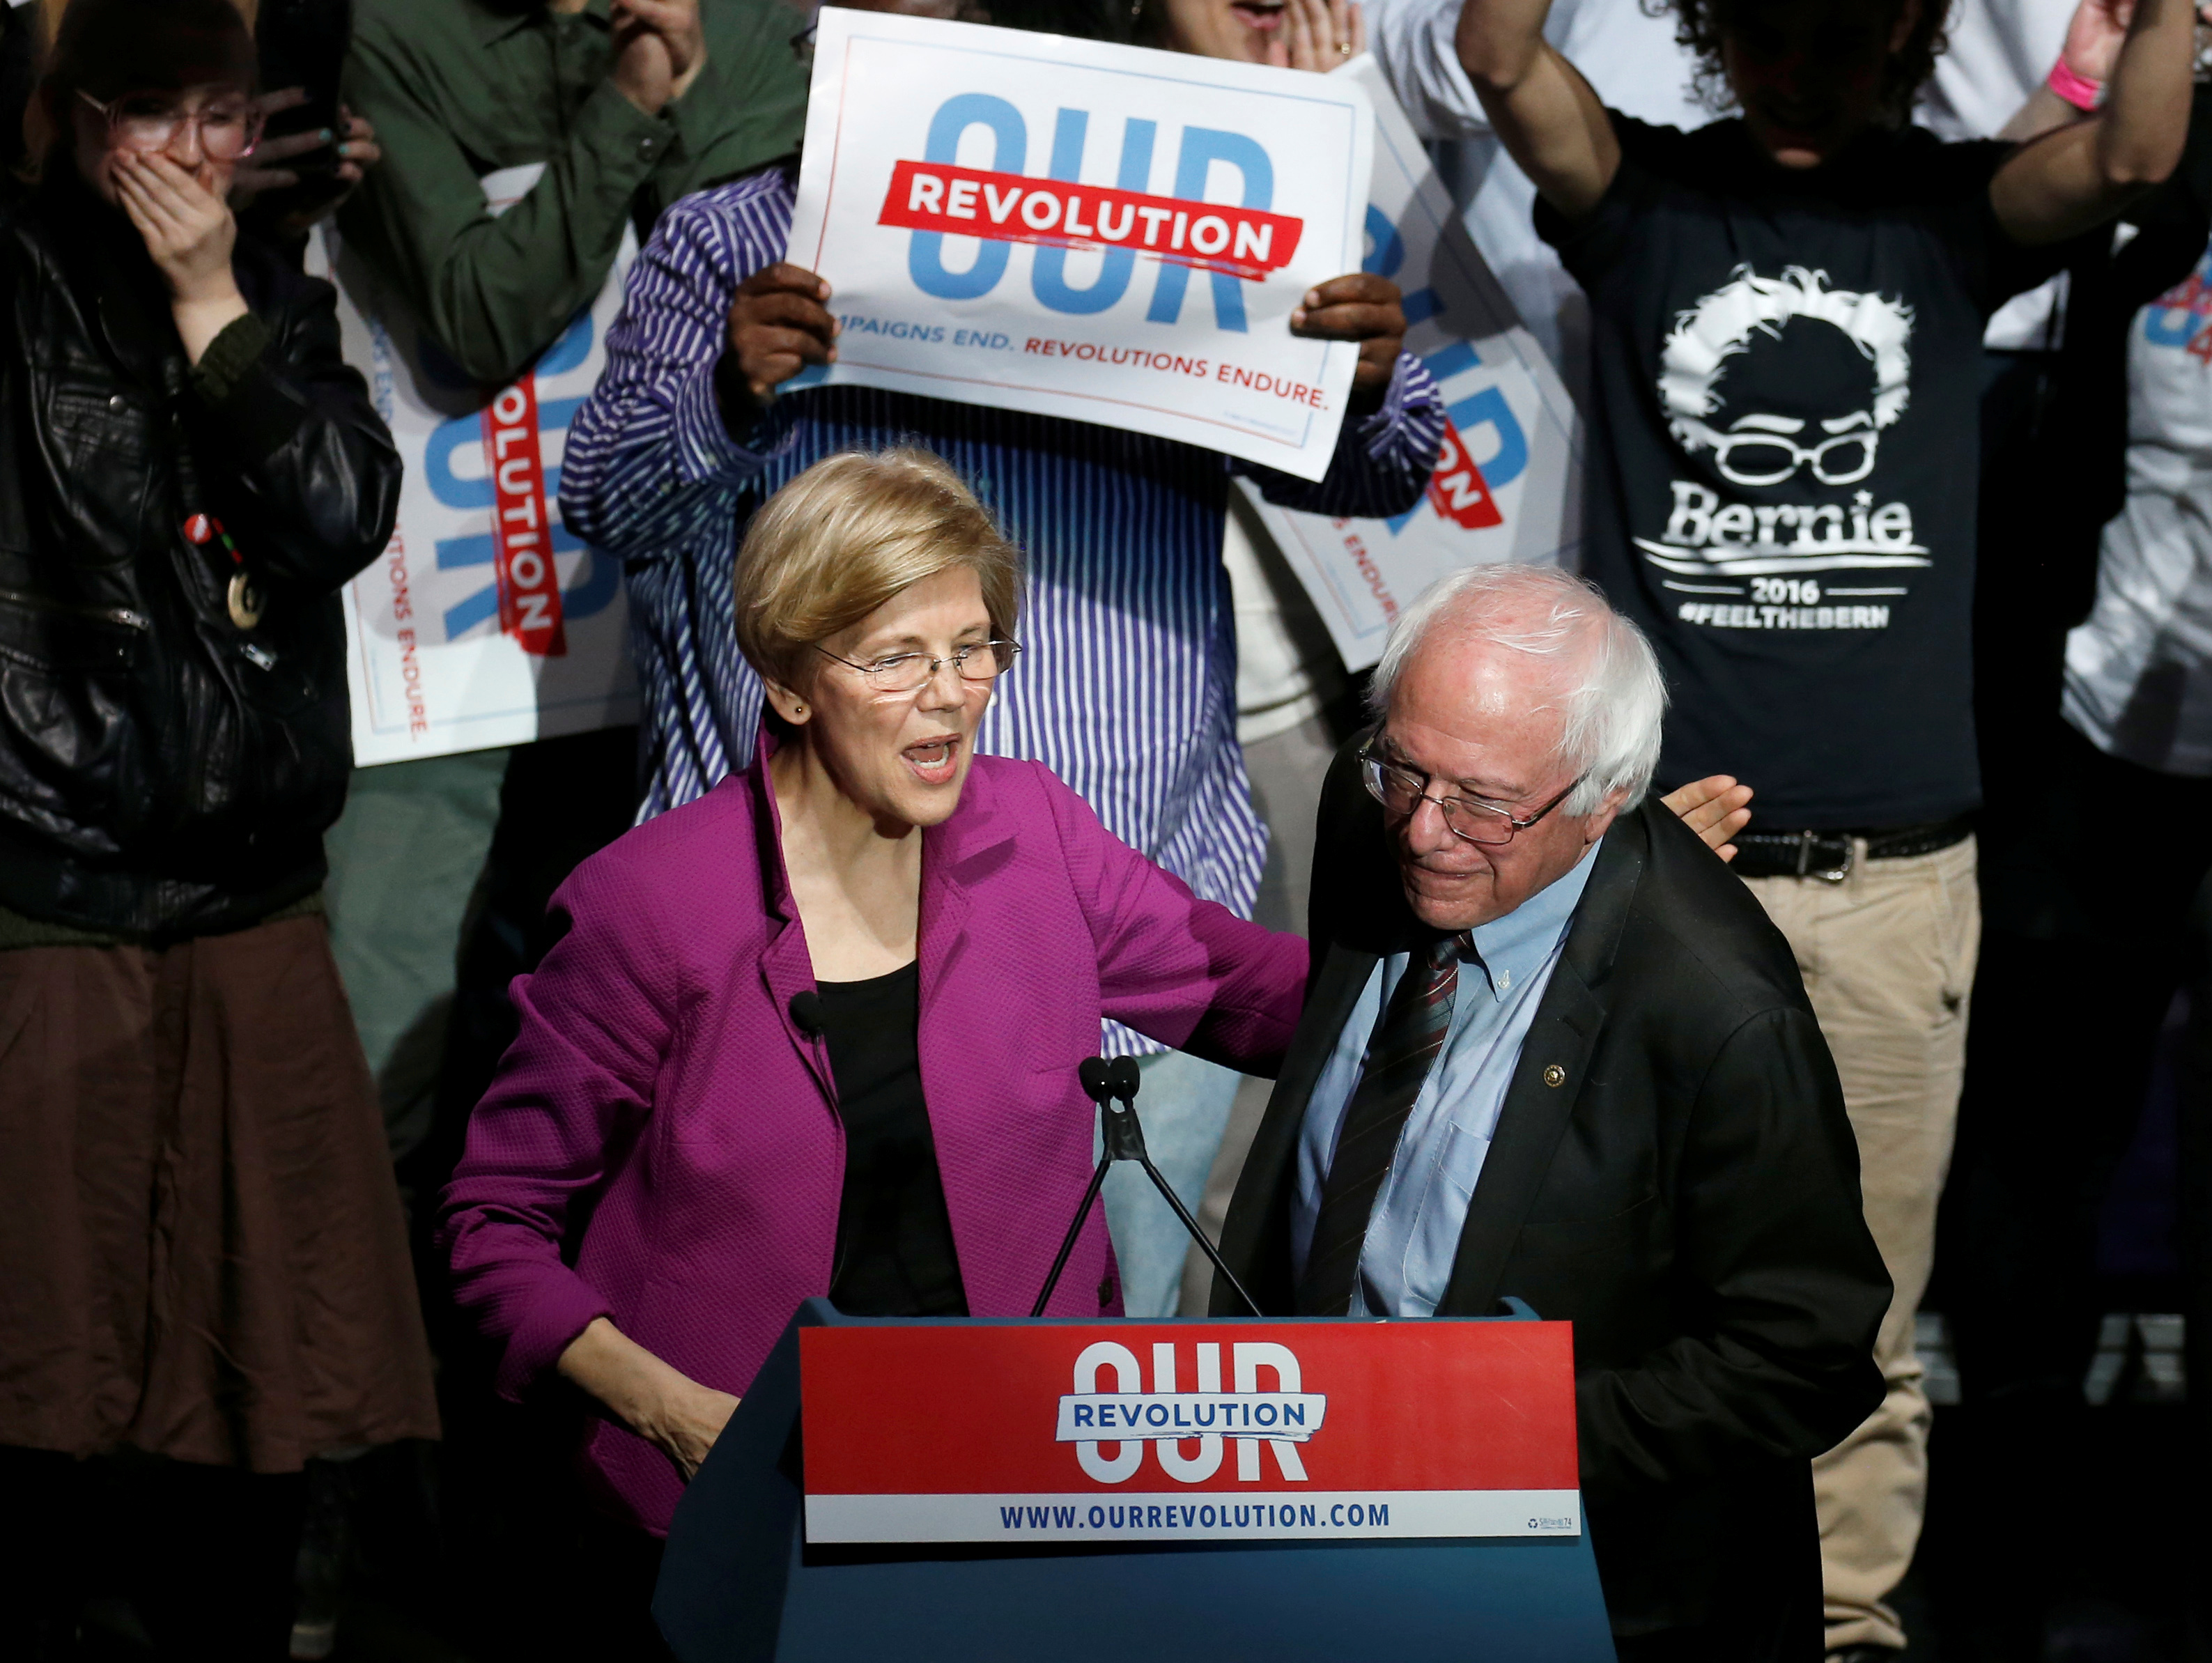 U.S. Senator Warren puts her arm around U.S. Senator Sanders after introducing him at a Our Revolution rally in Boston